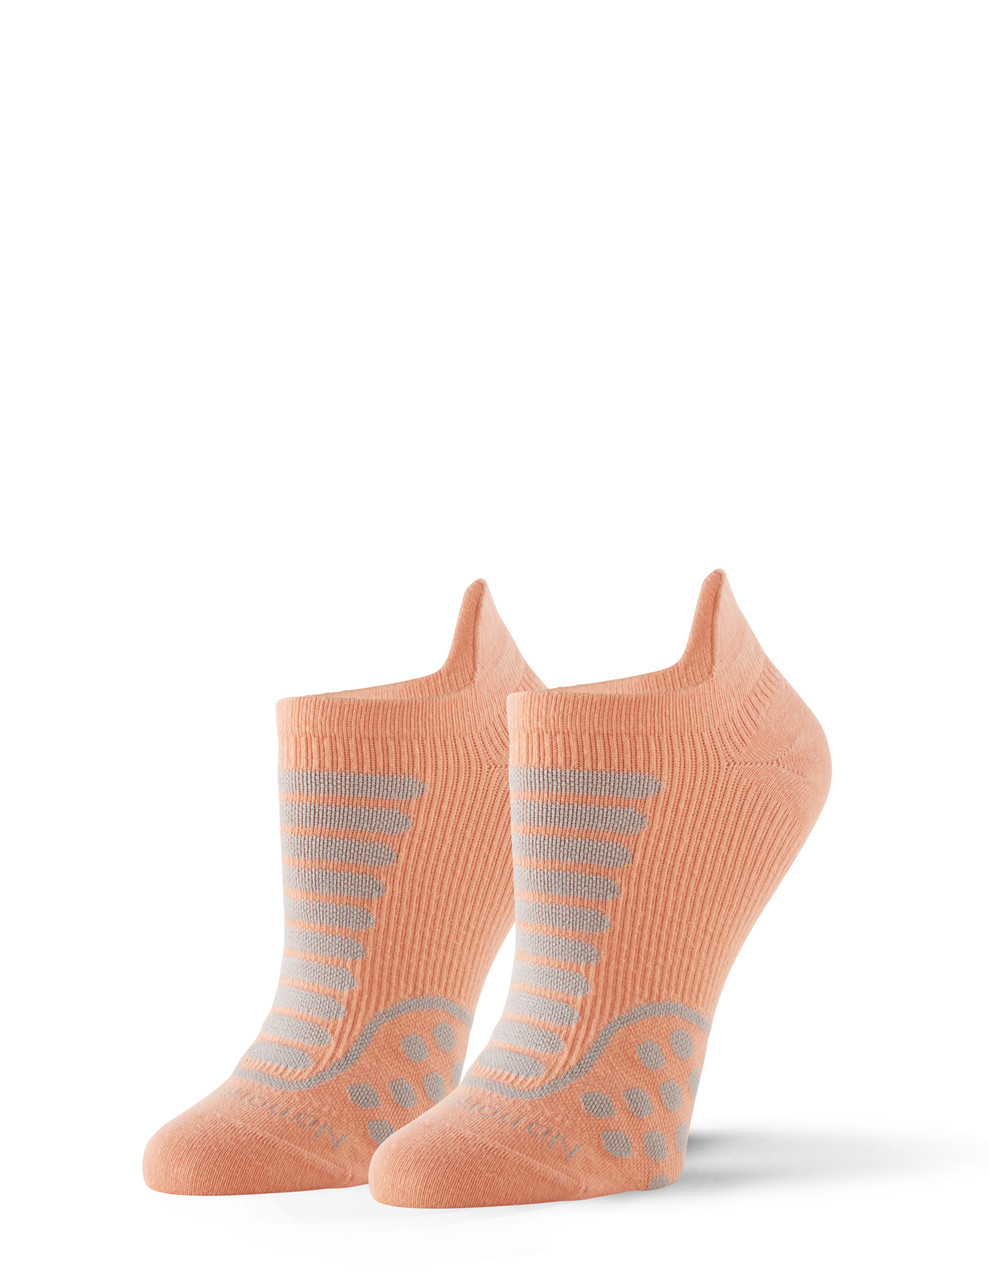 No Nonsense Soft & Breathable Socks, Liner, 4-10, Women's, Clothing